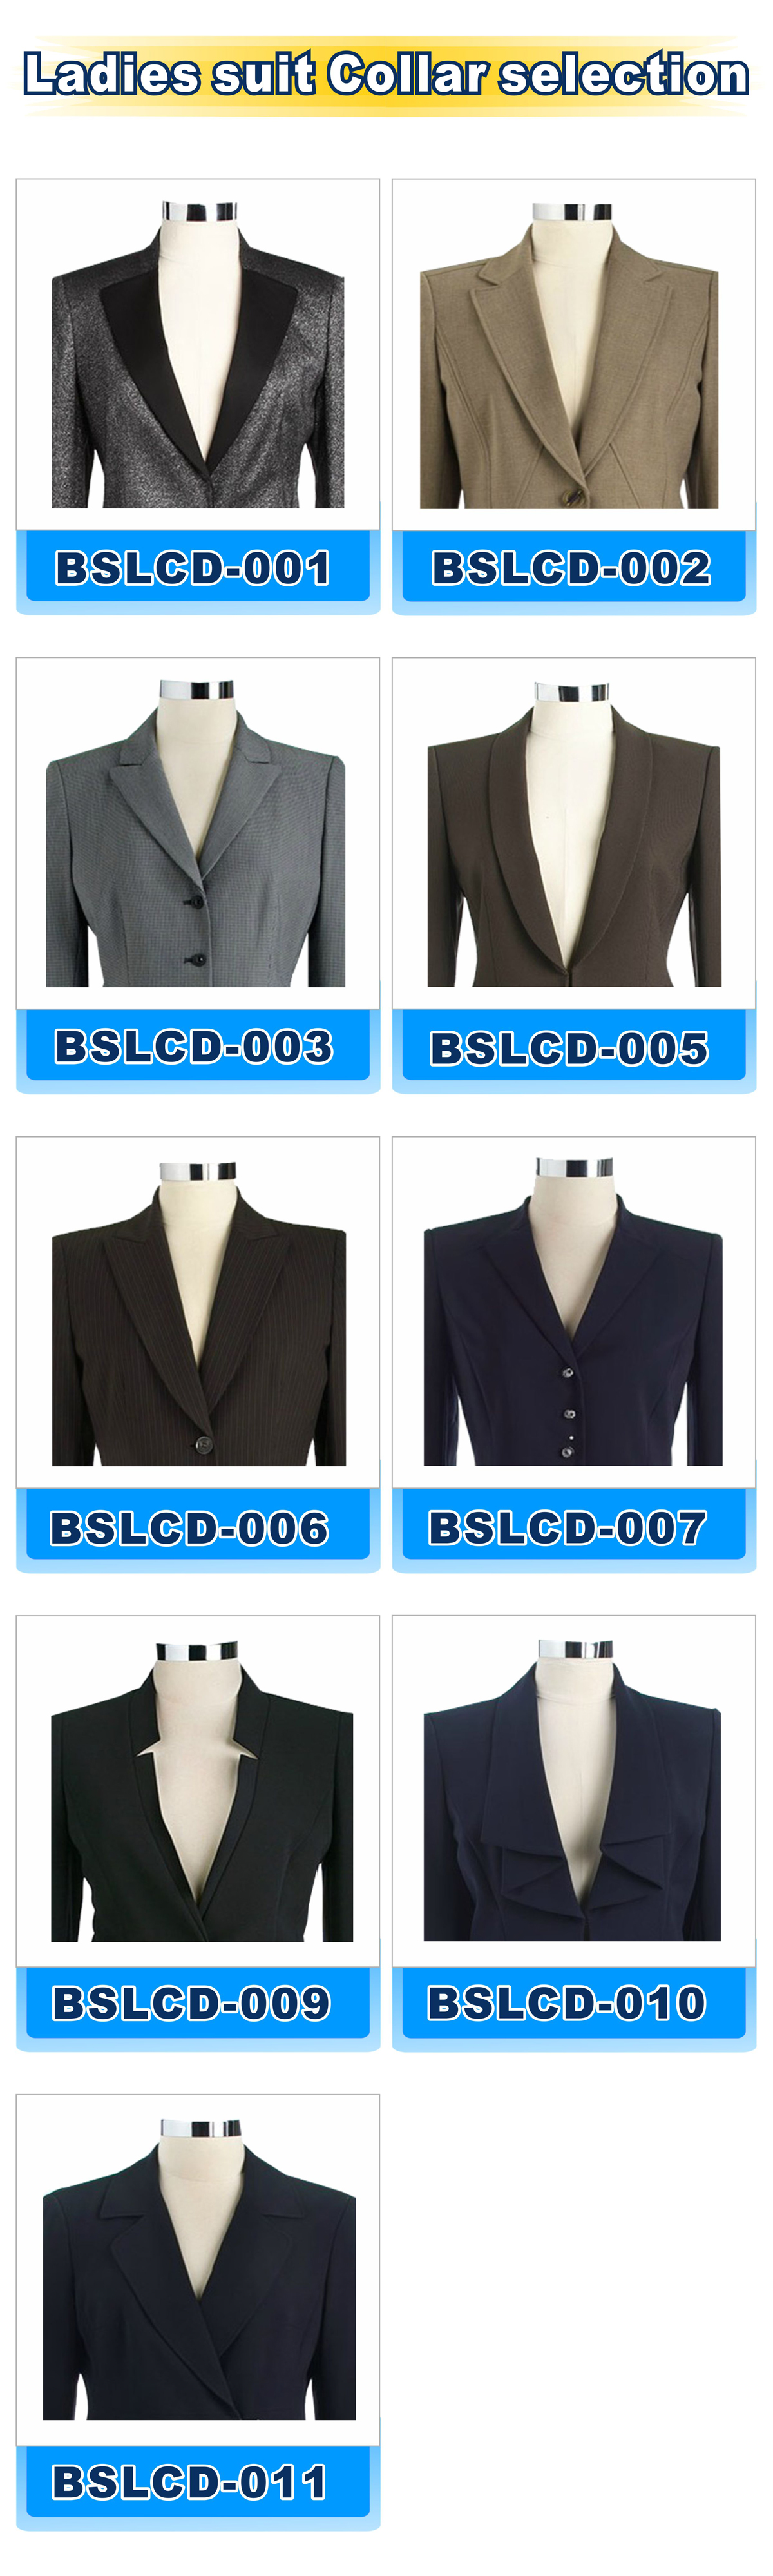 ladies suit collar selection 2